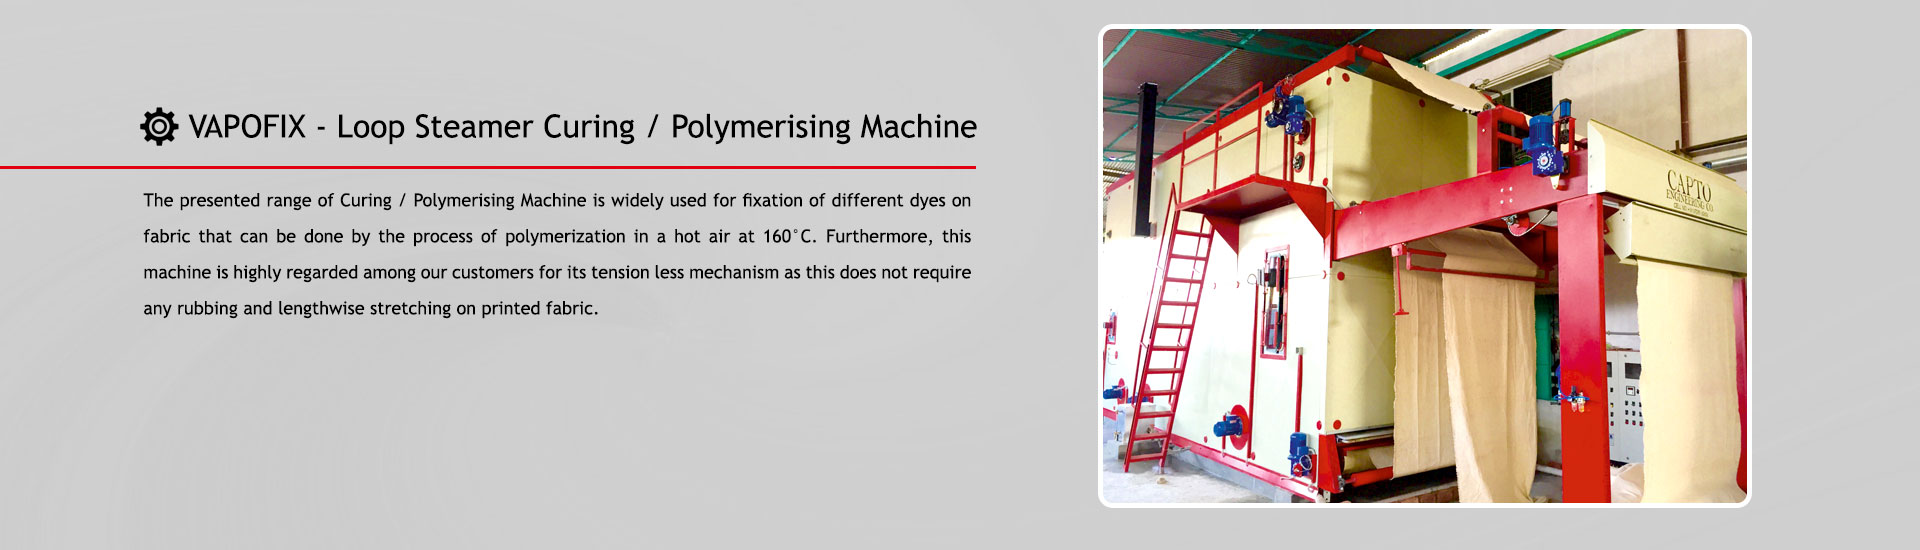 Vapofix Loop Steamer Curing Polymerising Machine